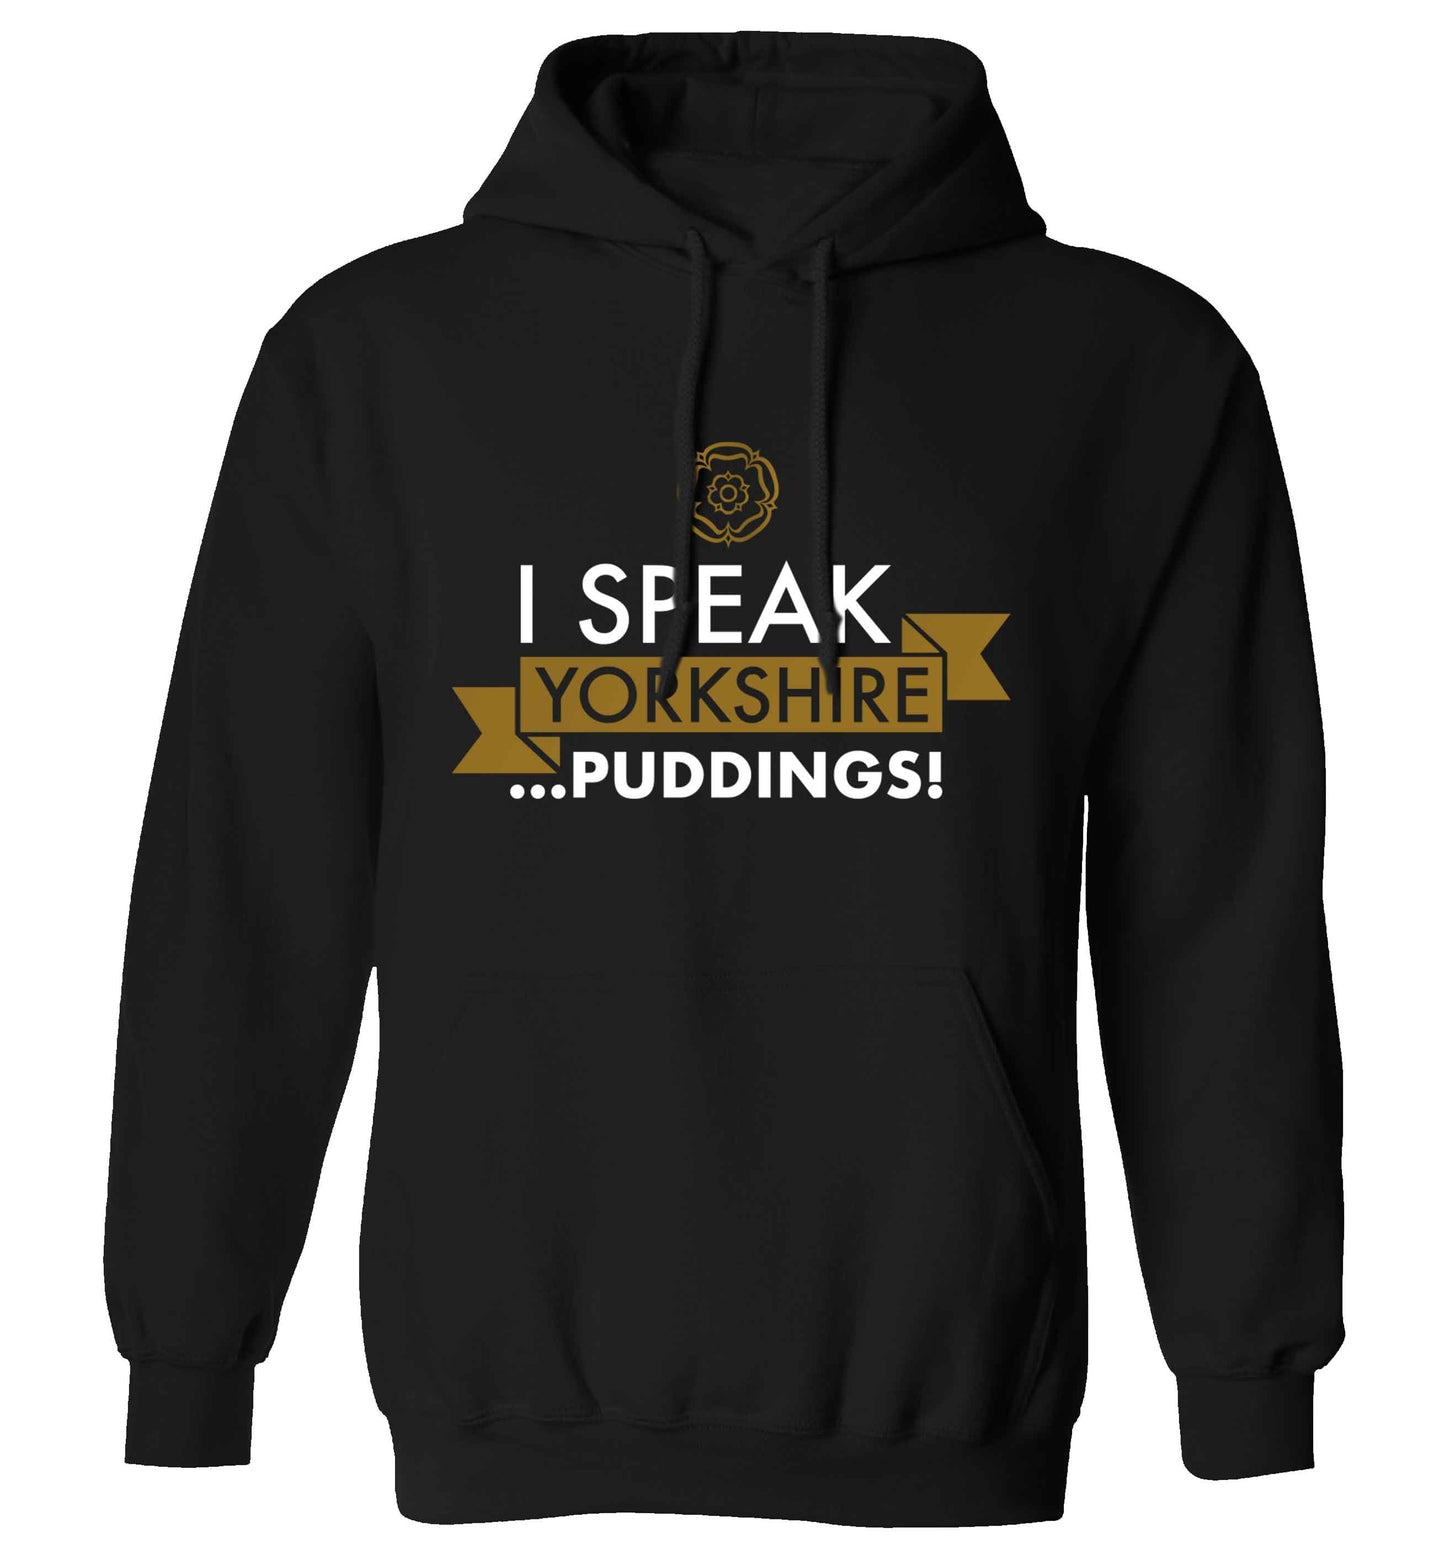 I speak Yorkshire...puddings adults unisex black hoodie 2XL